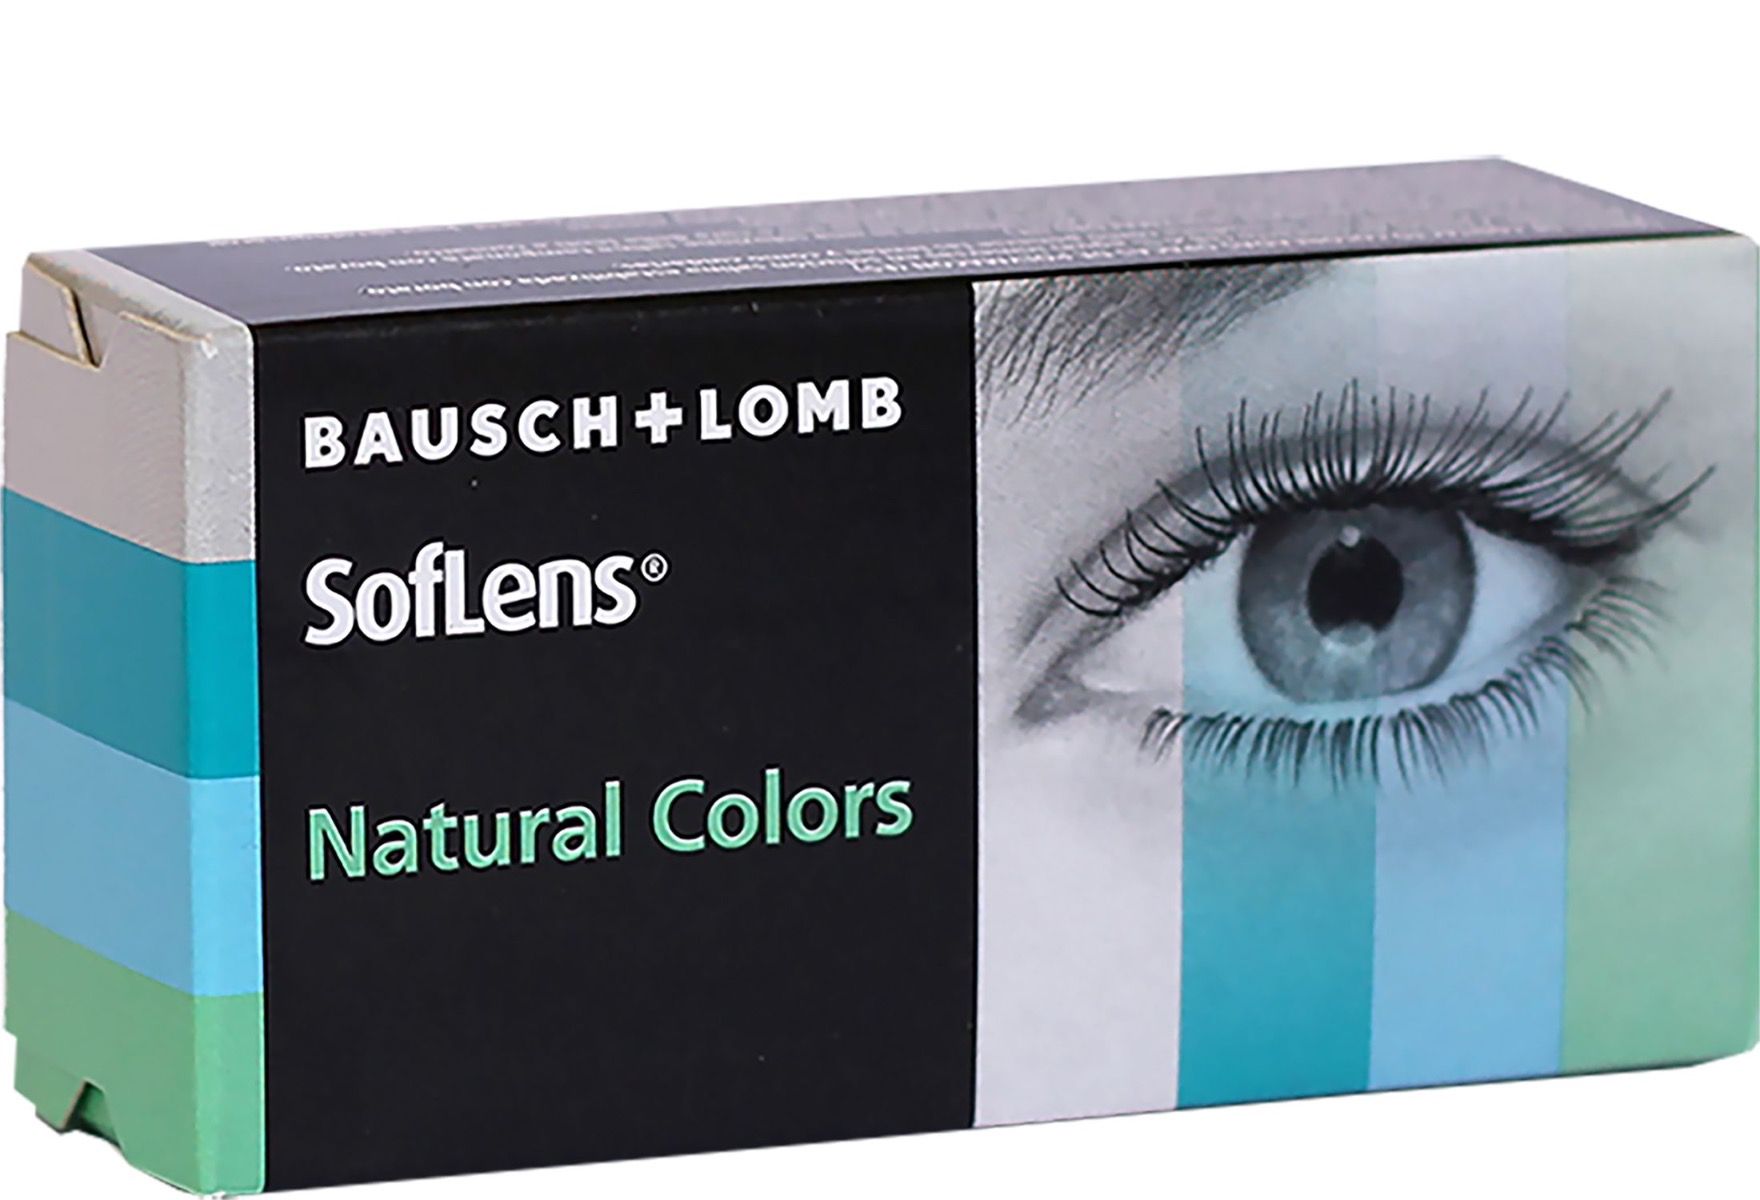 SofLens Natural Colors Amazon 2 stk